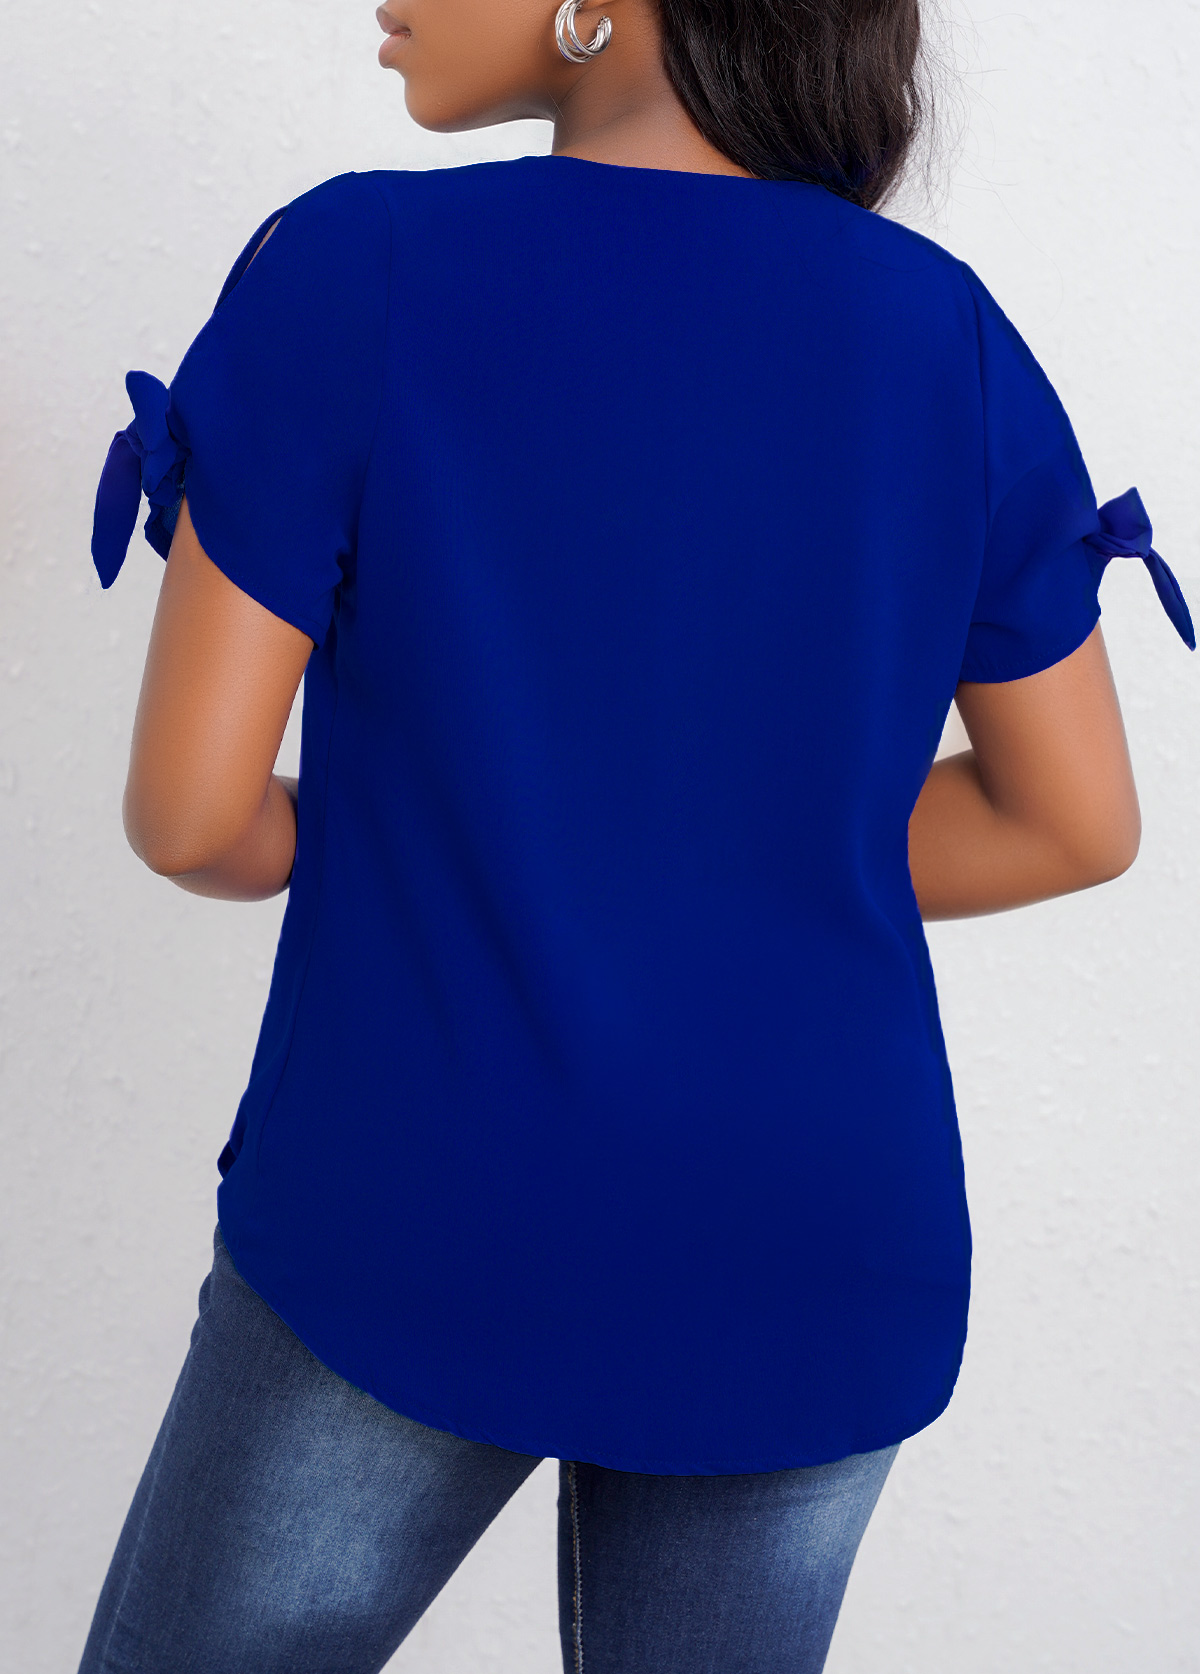 Bowknot Detail Royal Blue V Neck T Shirt